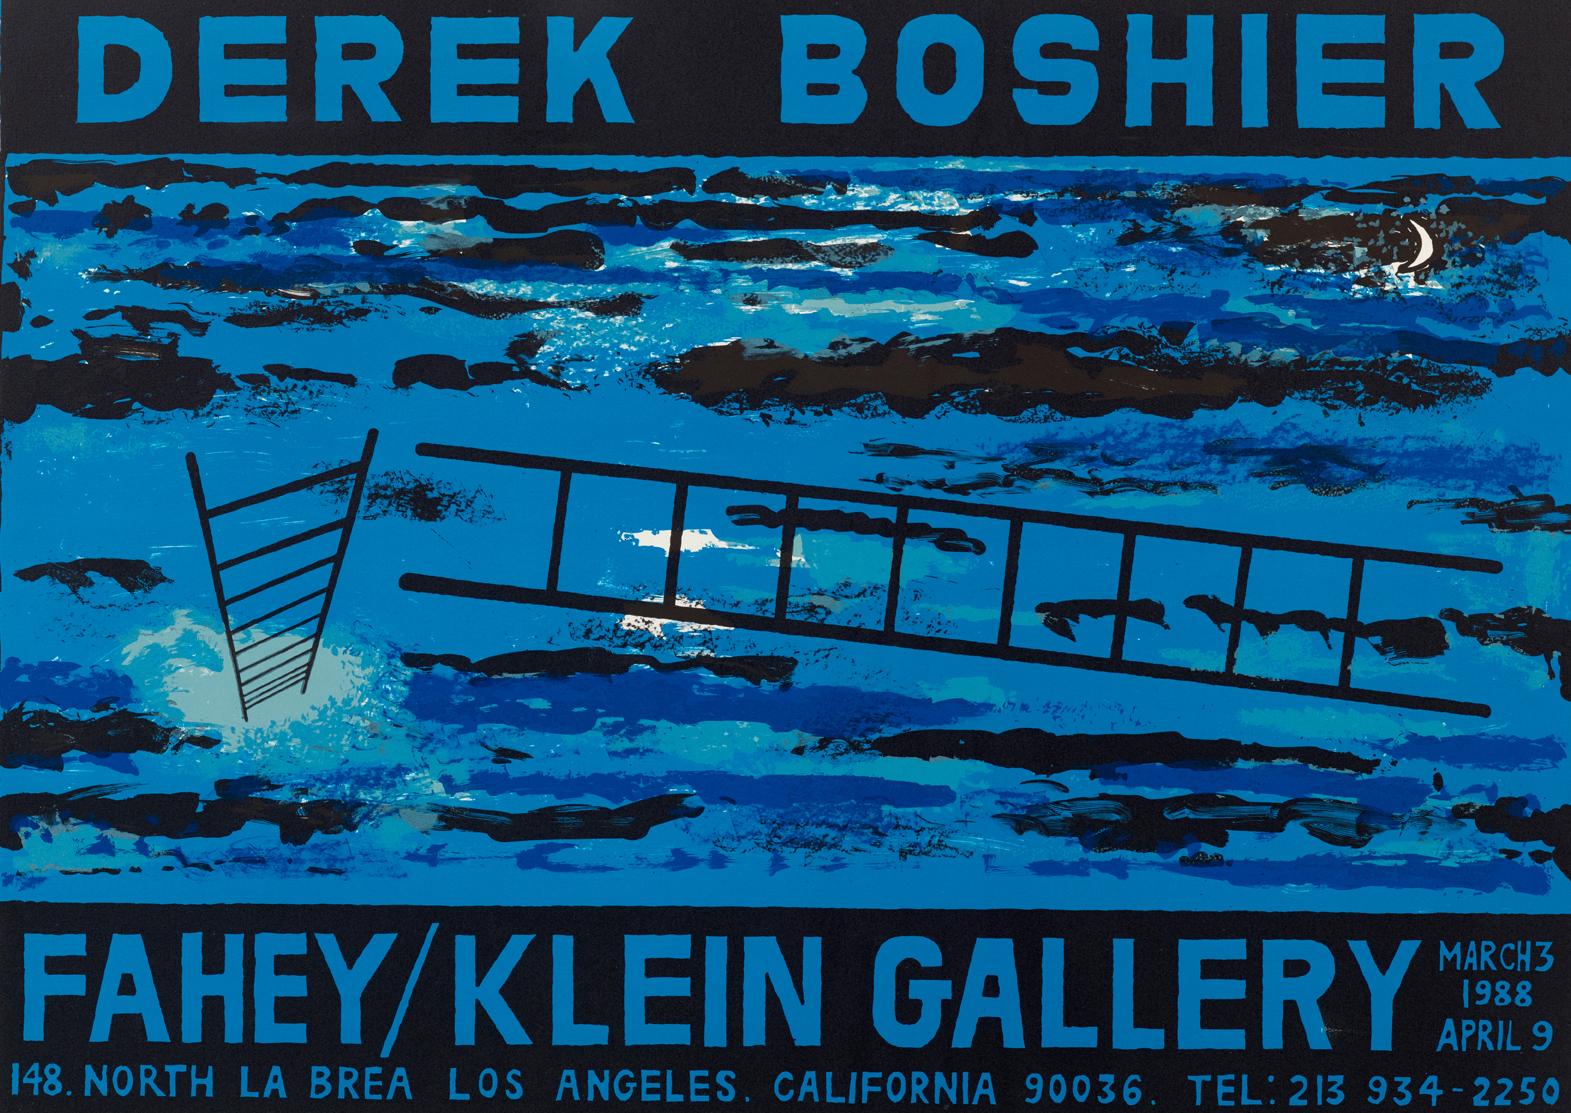 Fahey/Klein Gallery, Los Angeles - Print by Derek Boshier